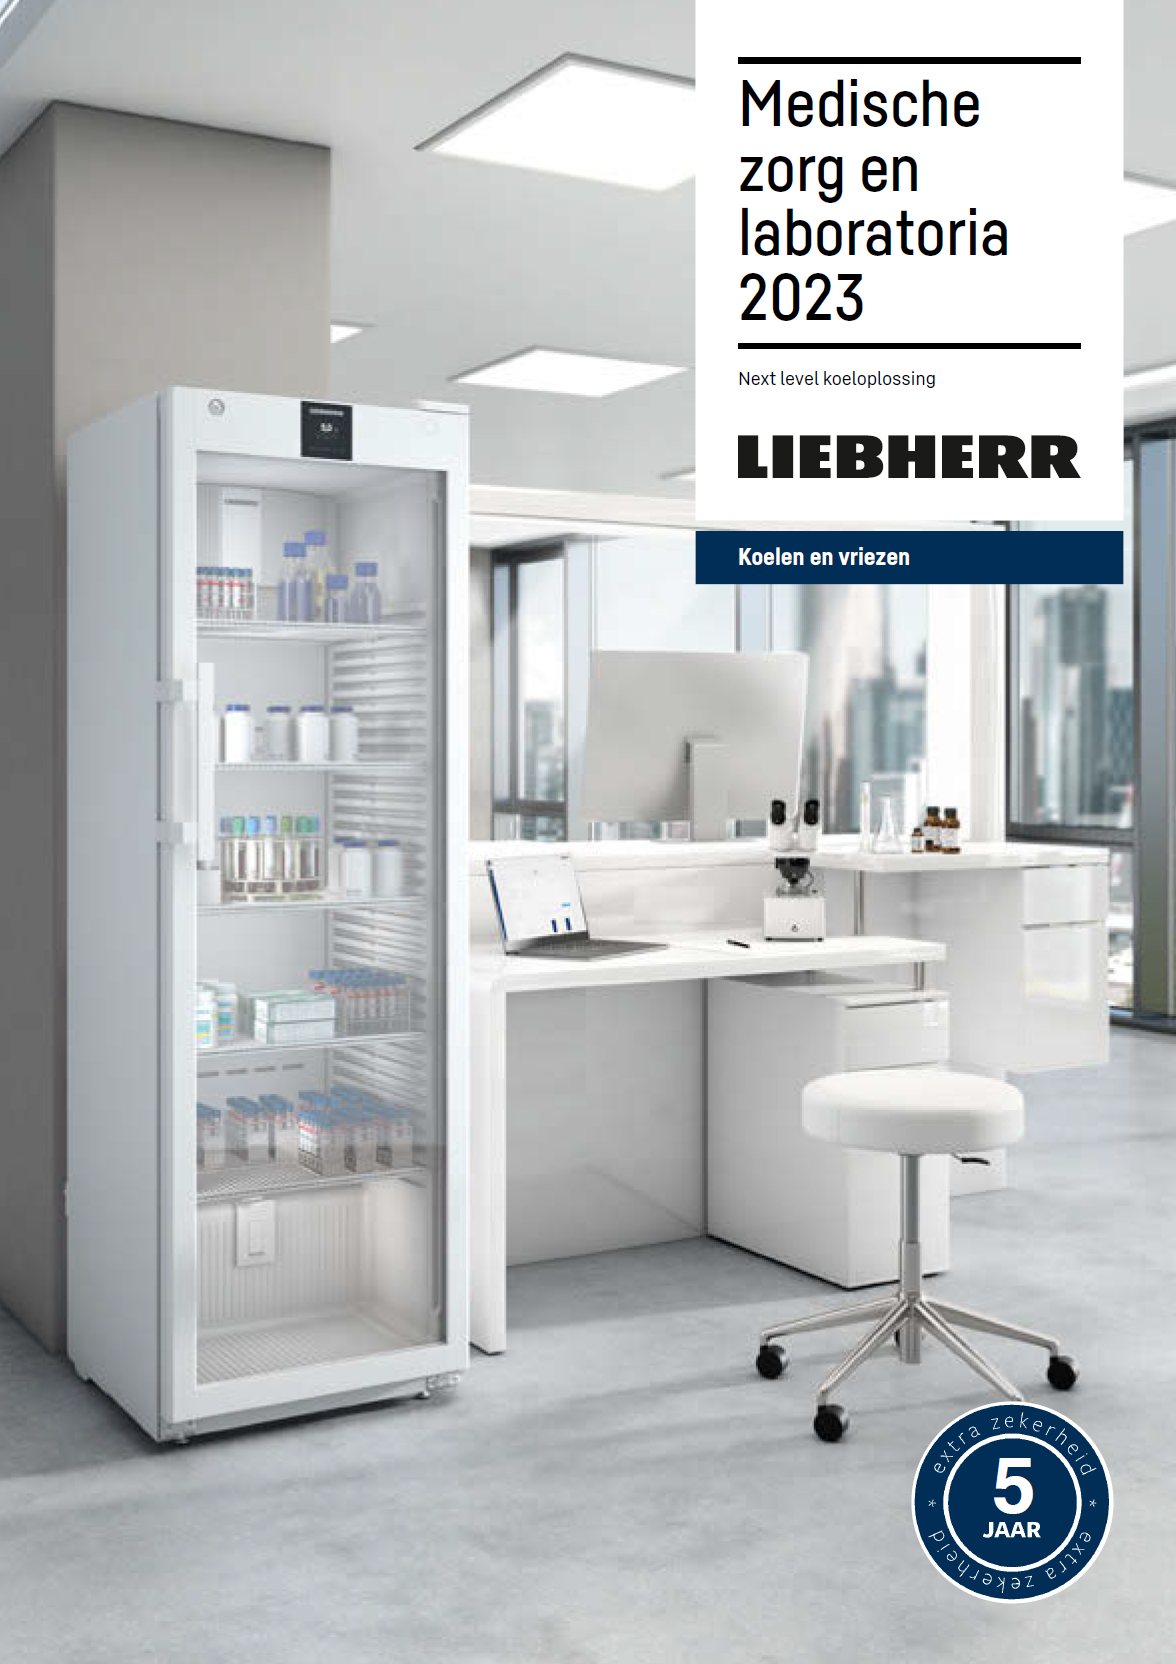 Professionele brochure medische zorg en laboratoria 2023 Liebherr